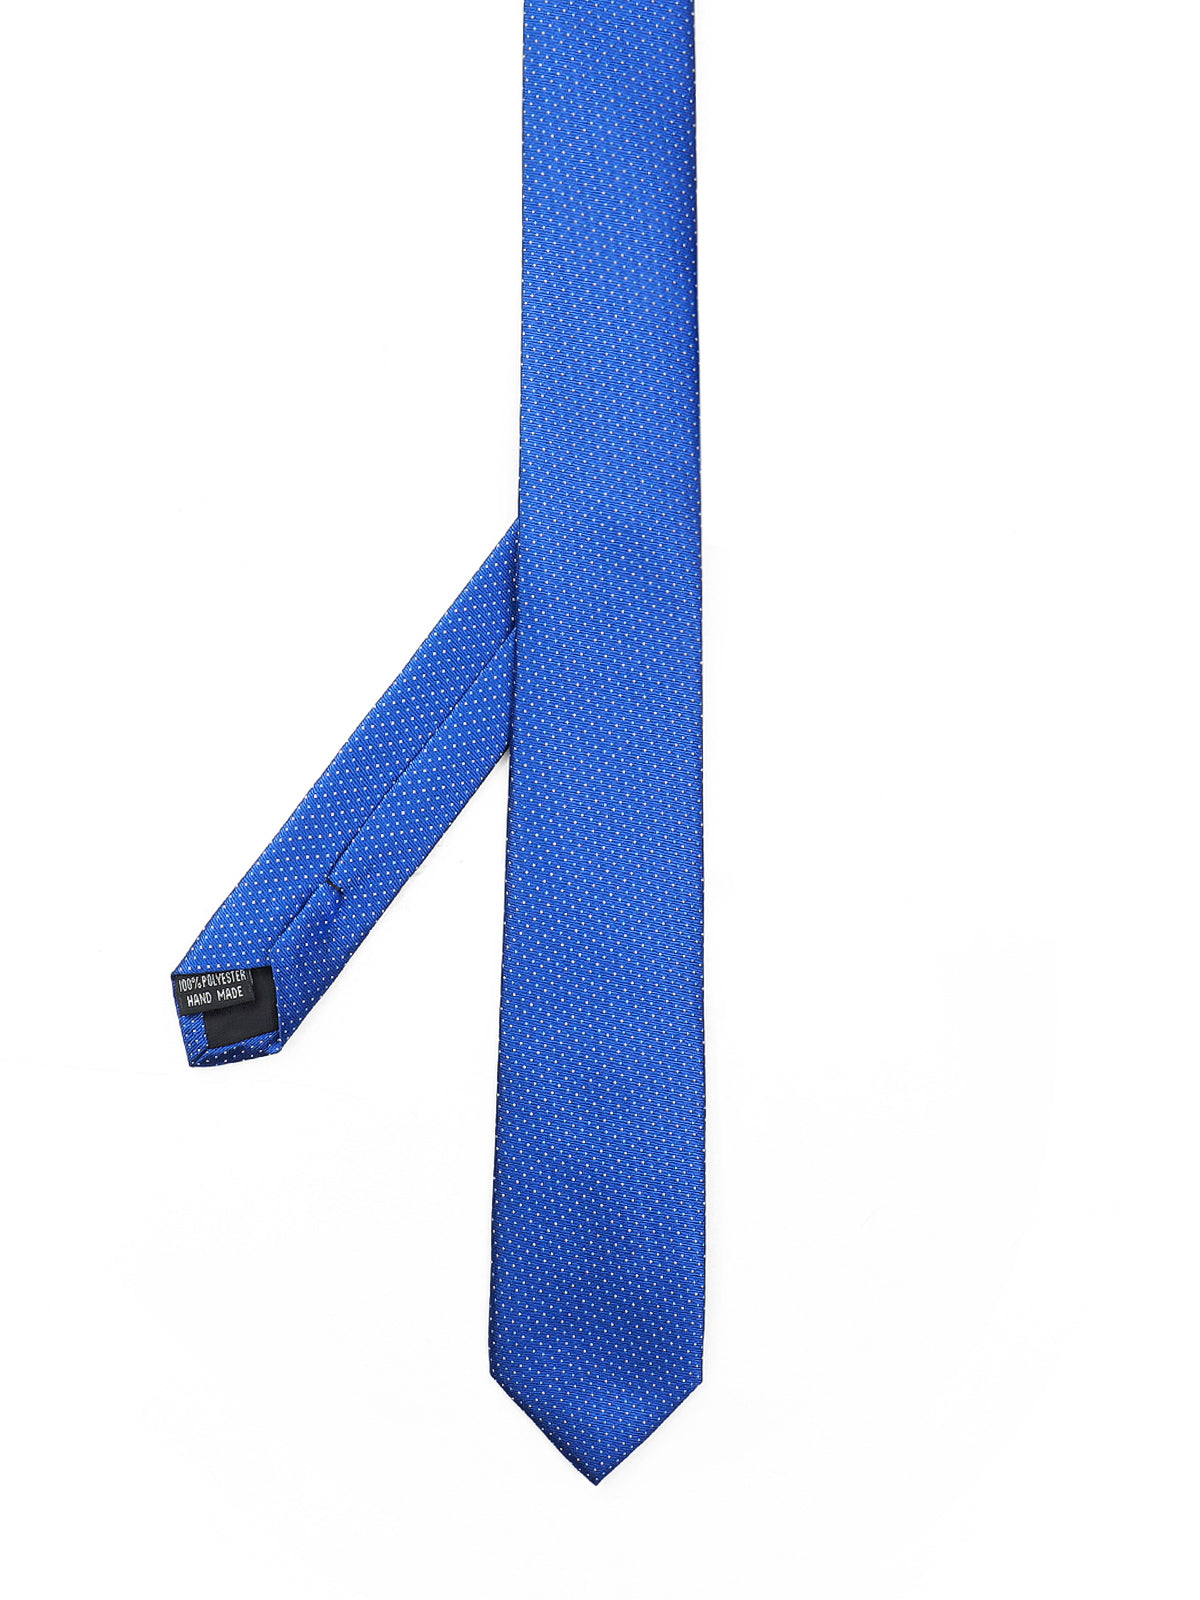 Royal Blue Tie - EAMT24-079